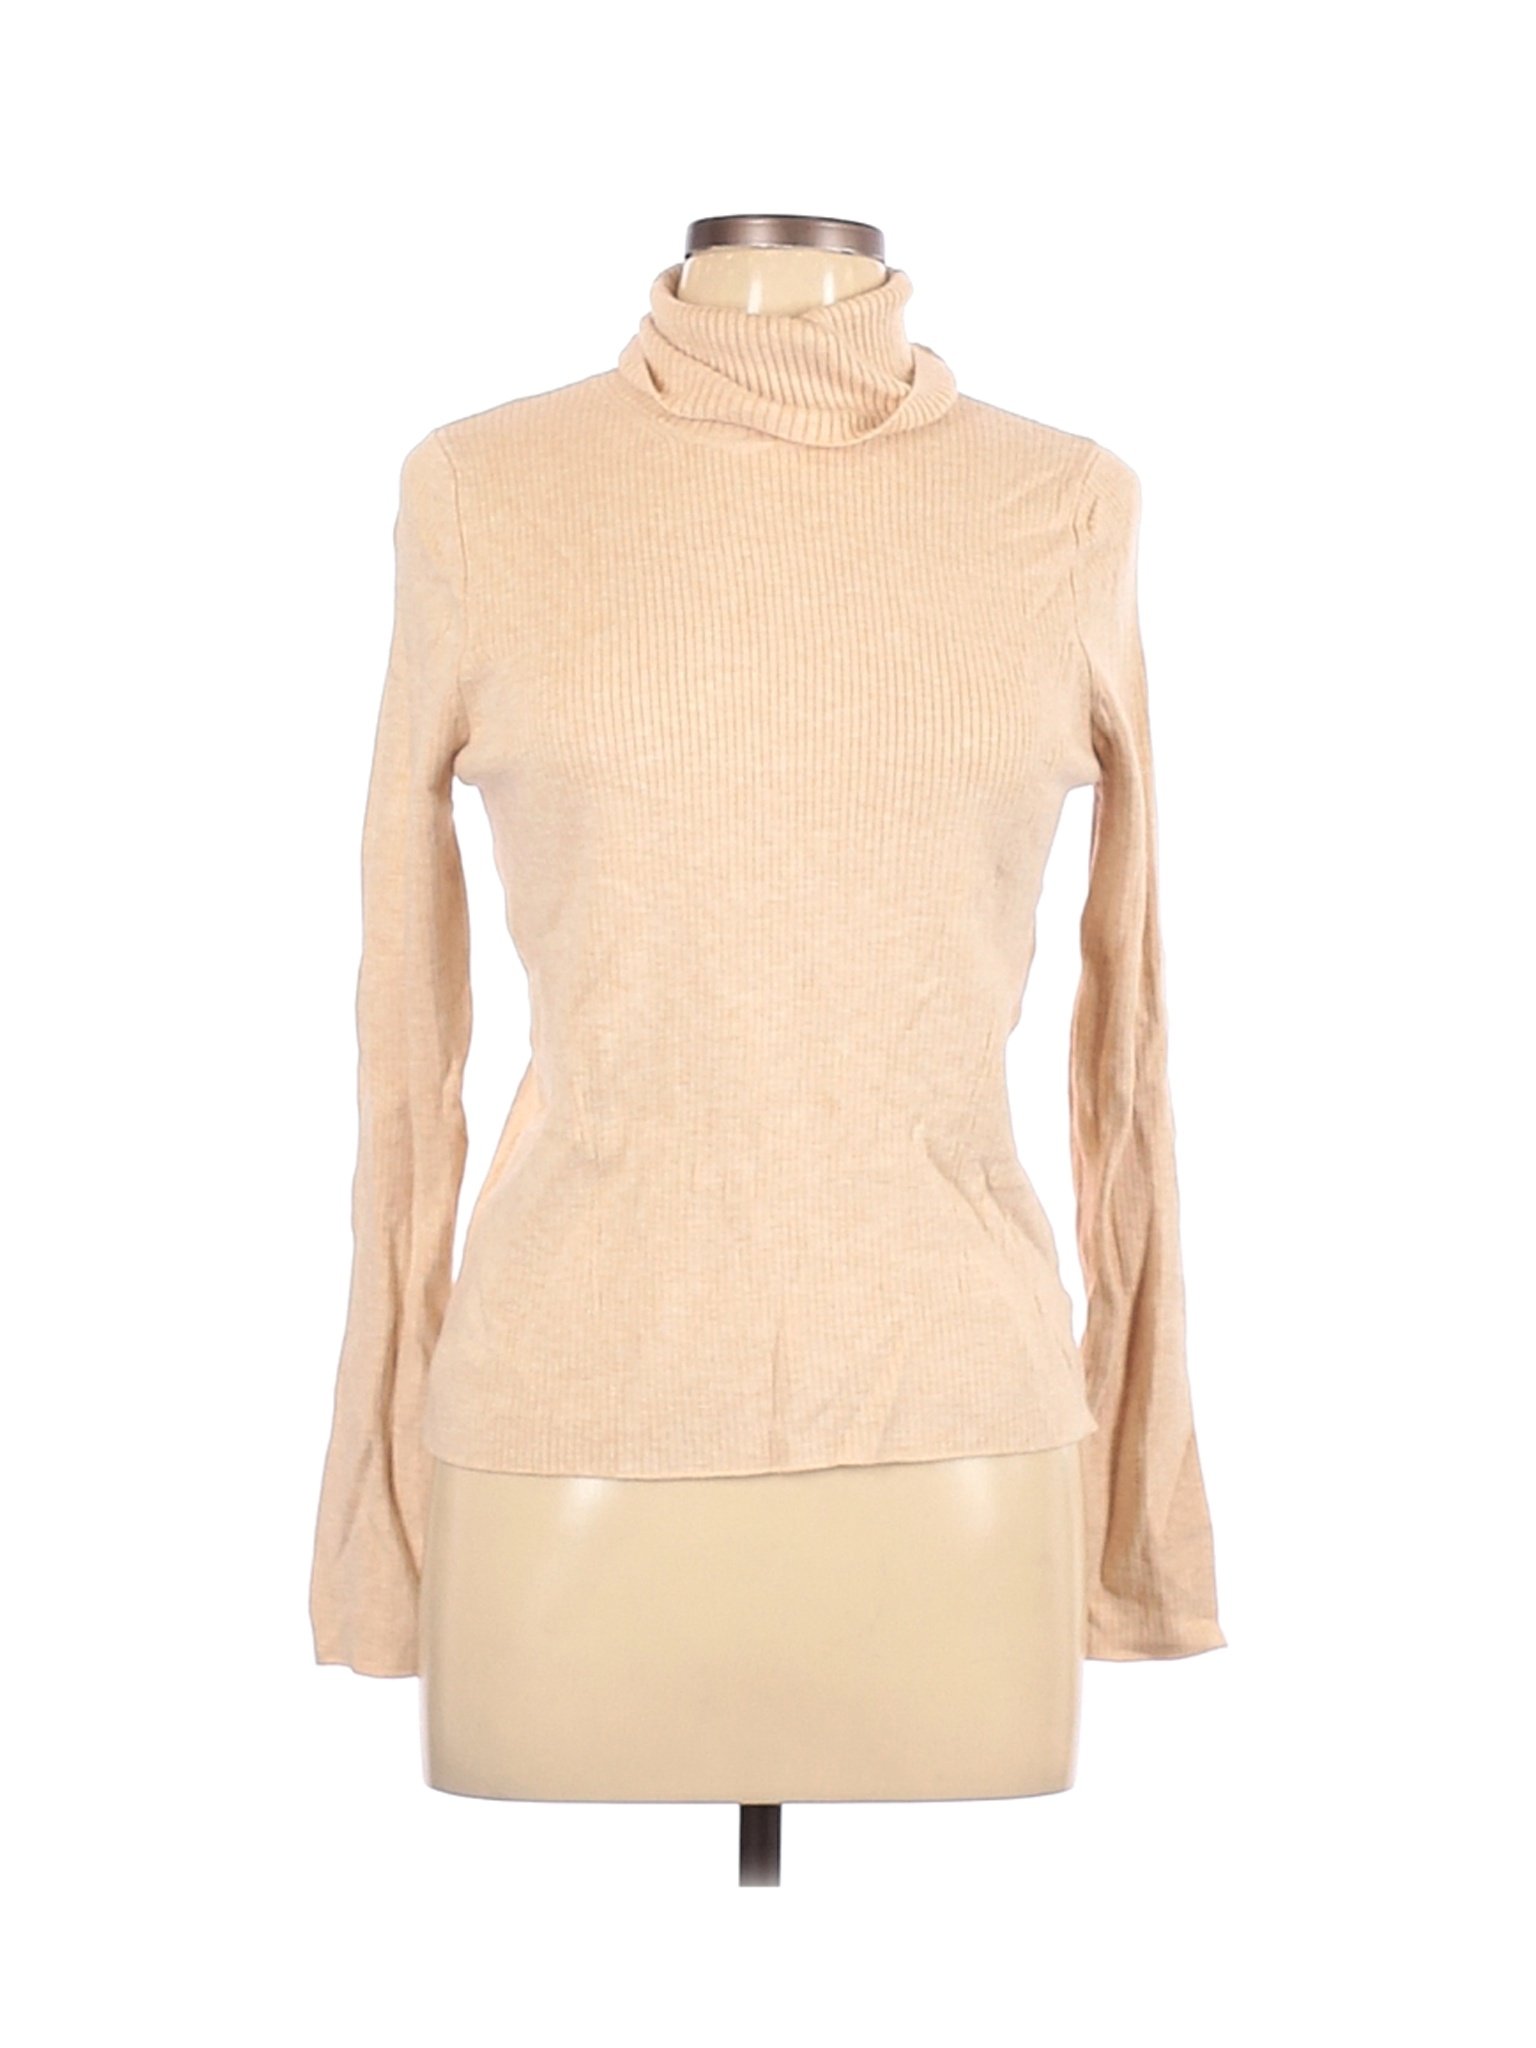 A New Day Women Brown Turtleneck Sweater L | eBay